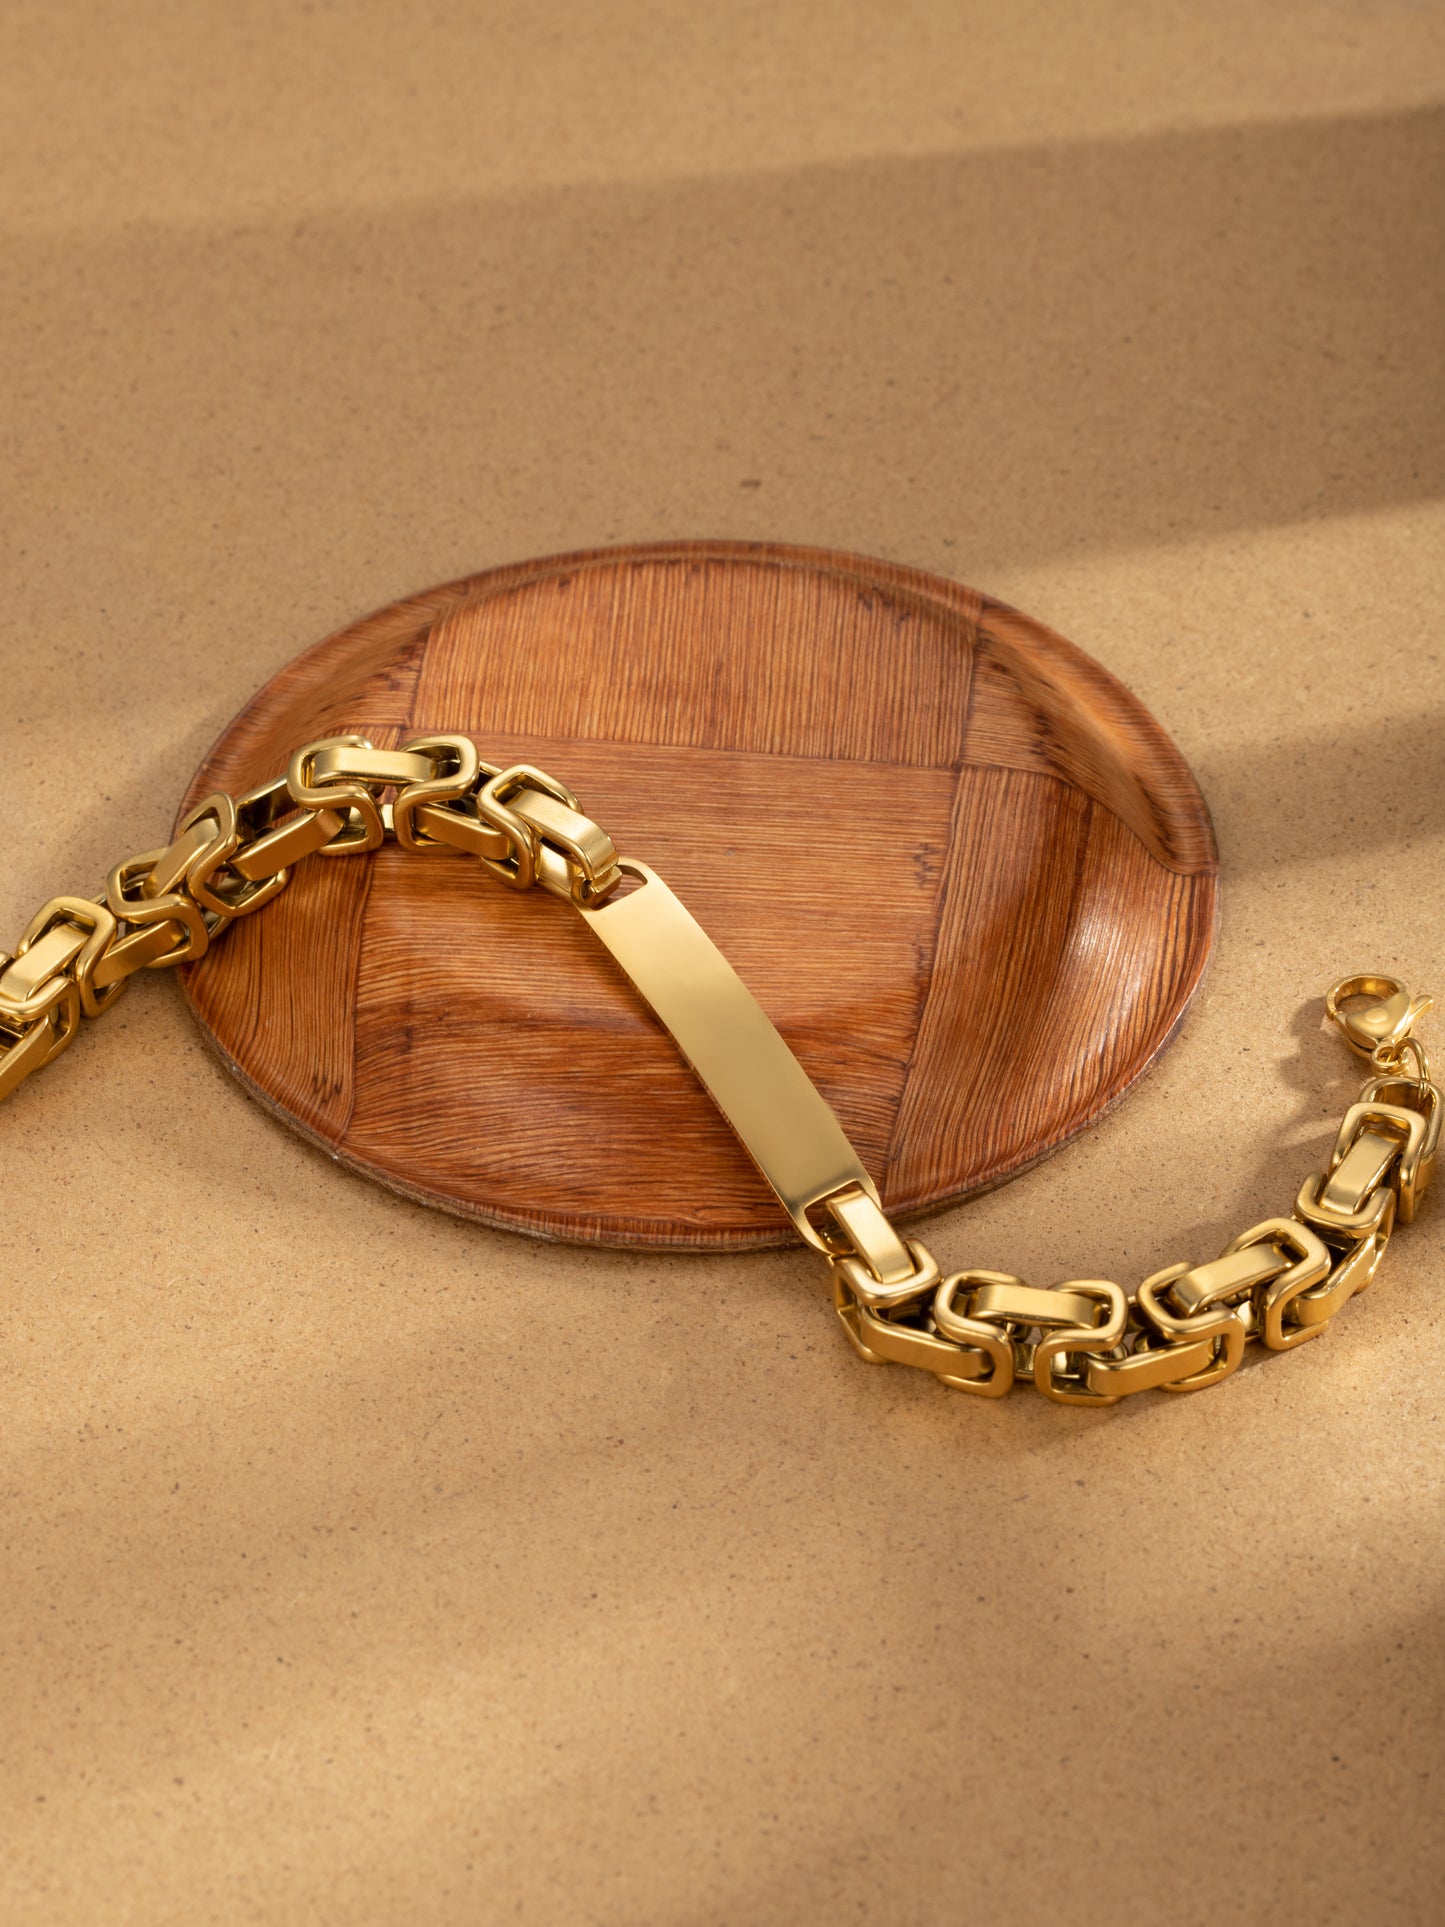 316L Stainless Steel Gold Tone Cuban Chain interlocking Men Bracelet